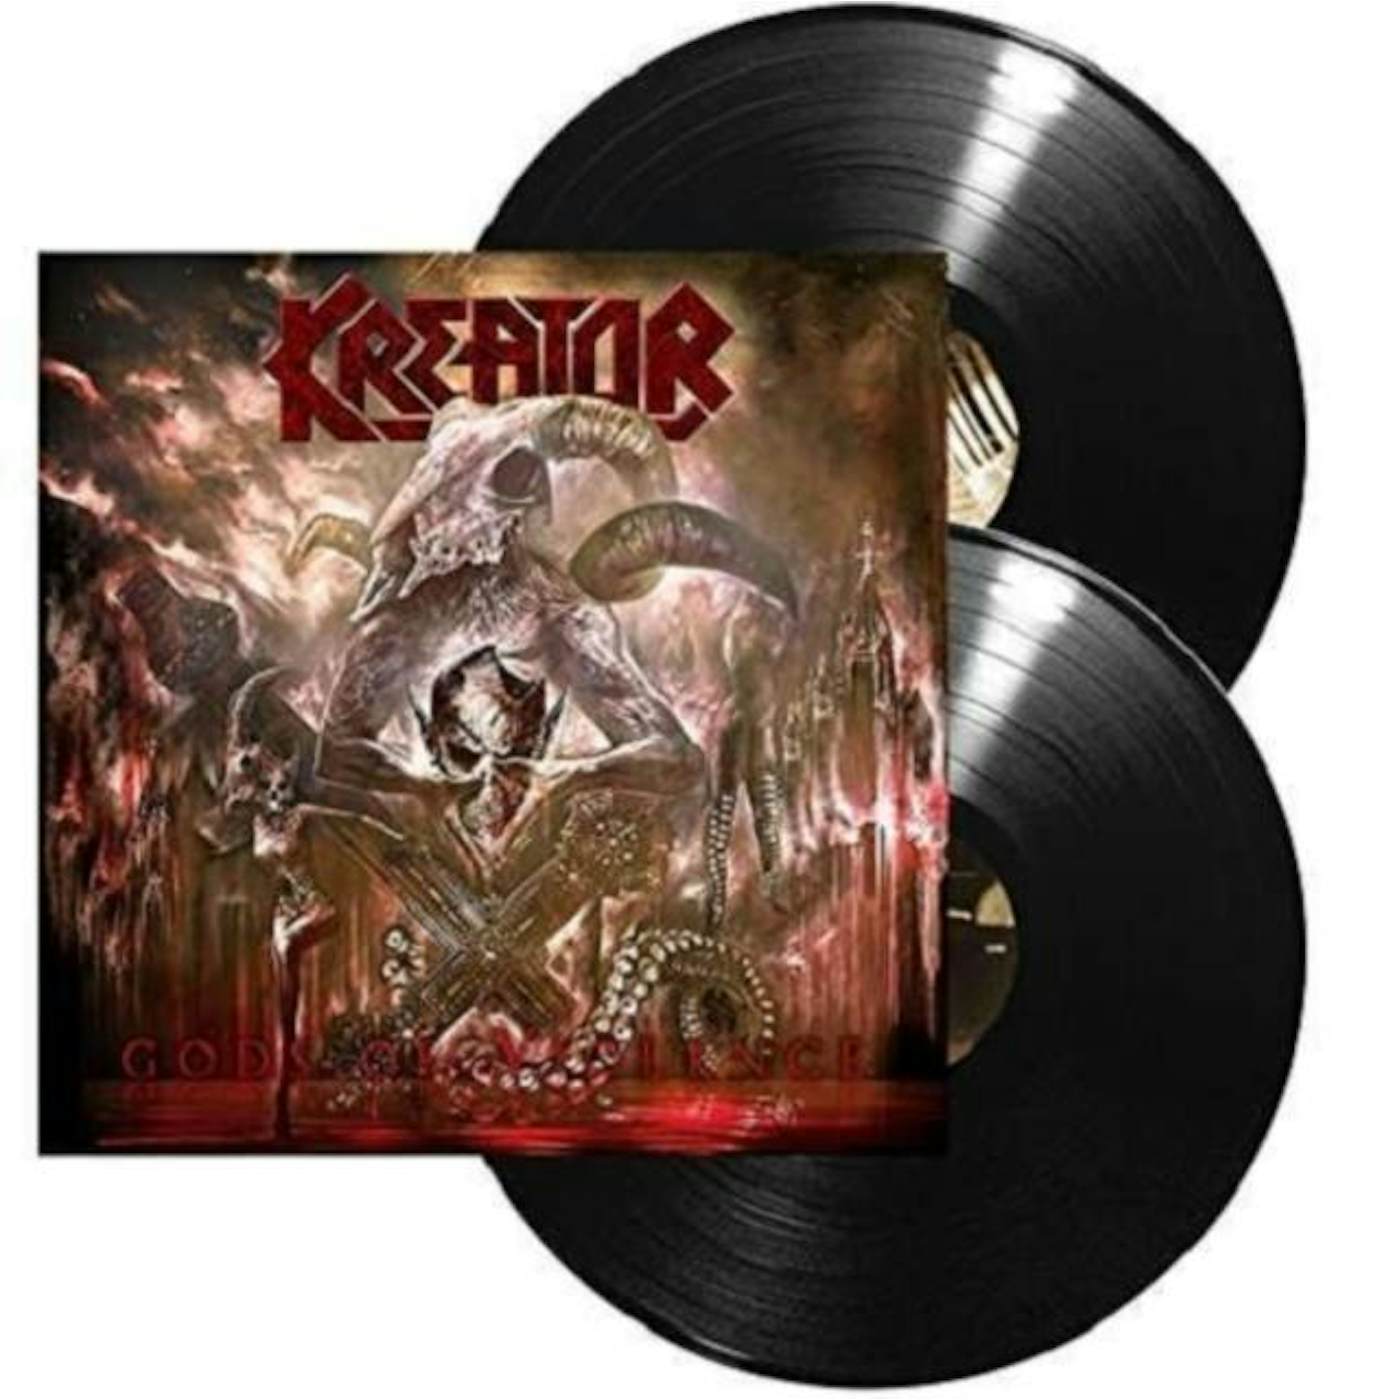 Kreator LP Vinyl Record - Gods Of Violence